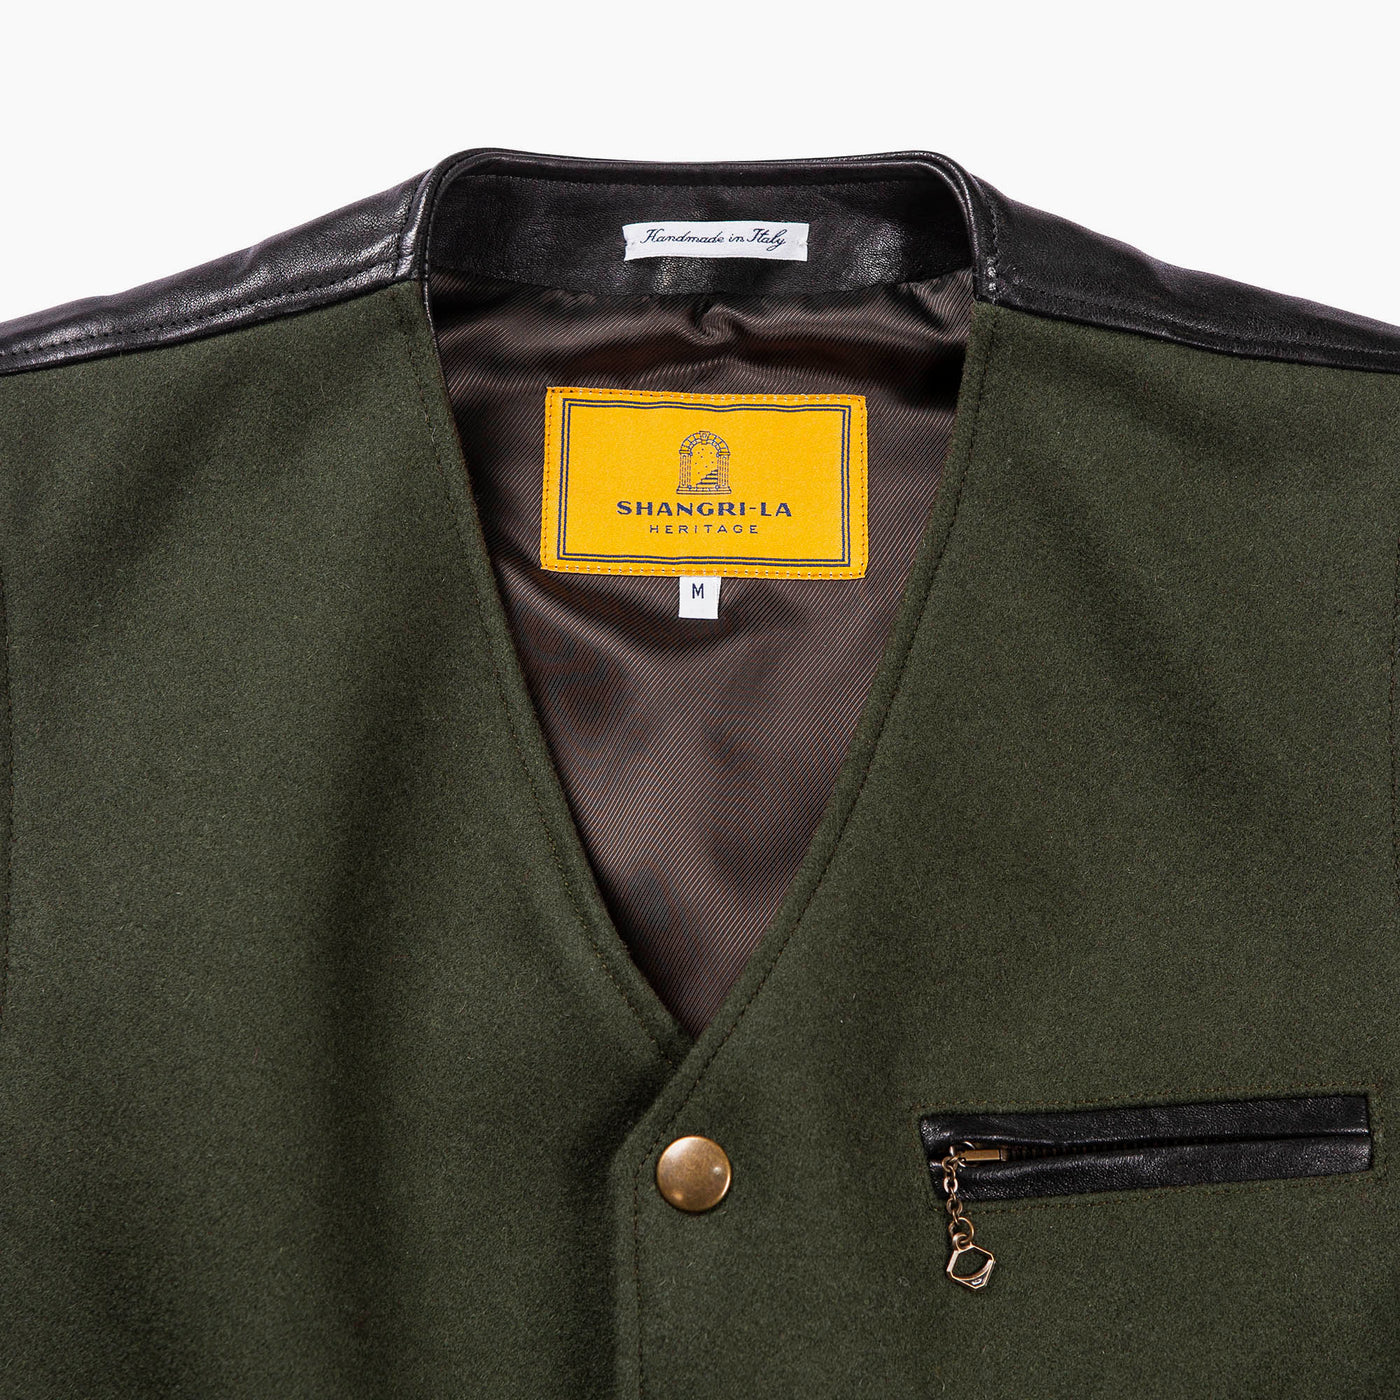 Shangri La - Wool vest/leather - Mandriano Forrest Wool Vest - Green/black leather